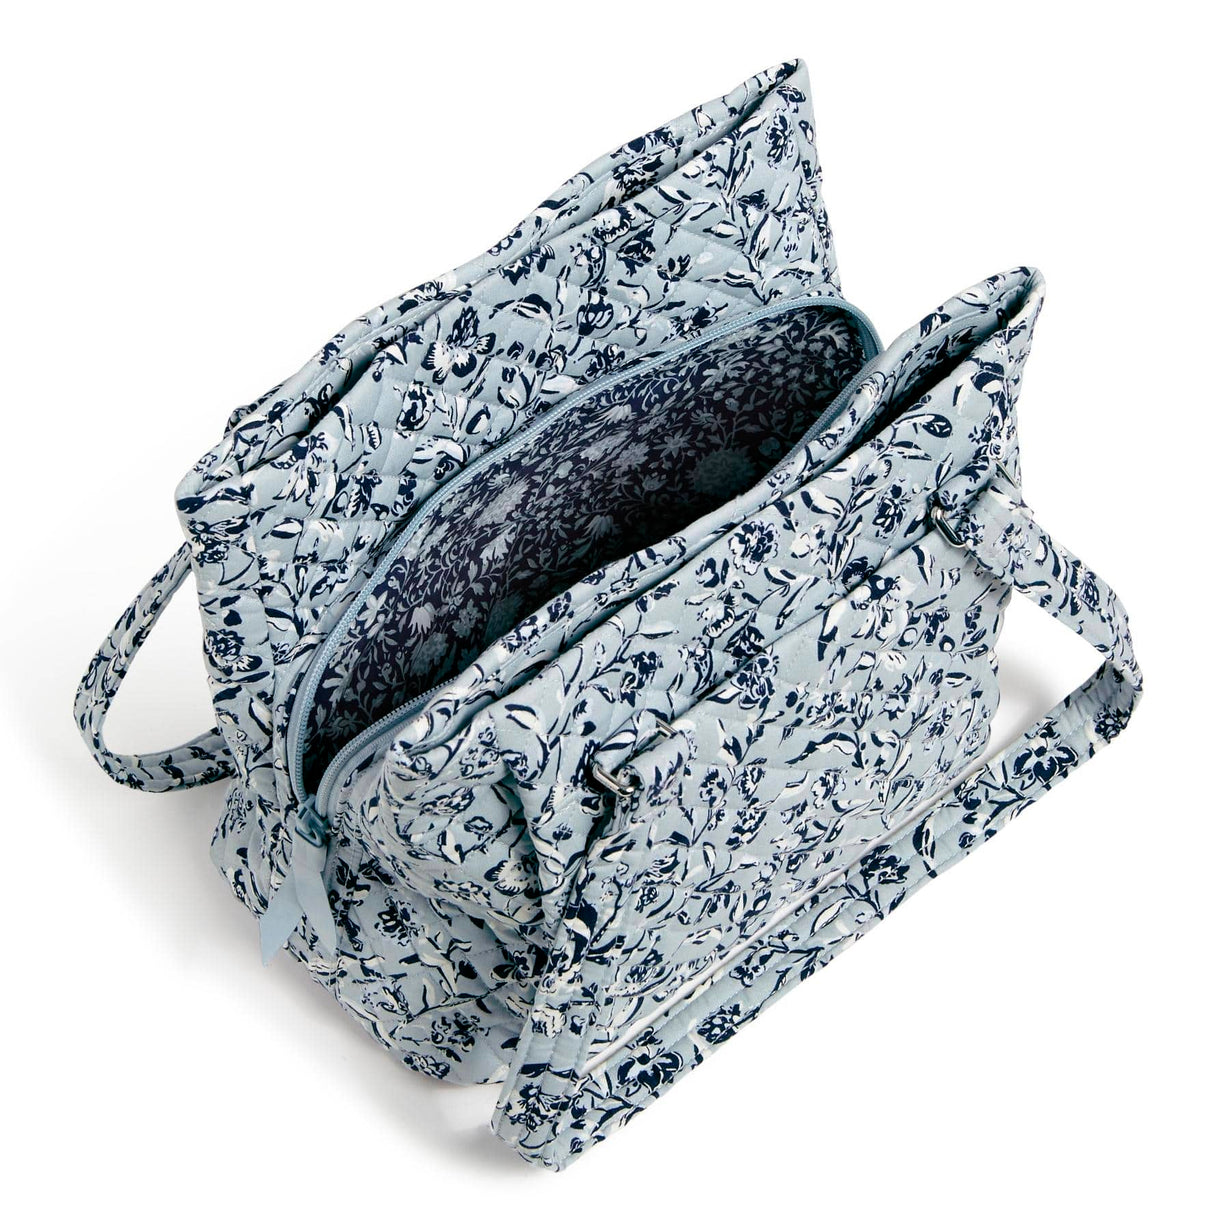 Multi-Compartment Shoulder Bag - Cotton | Vera Bradley